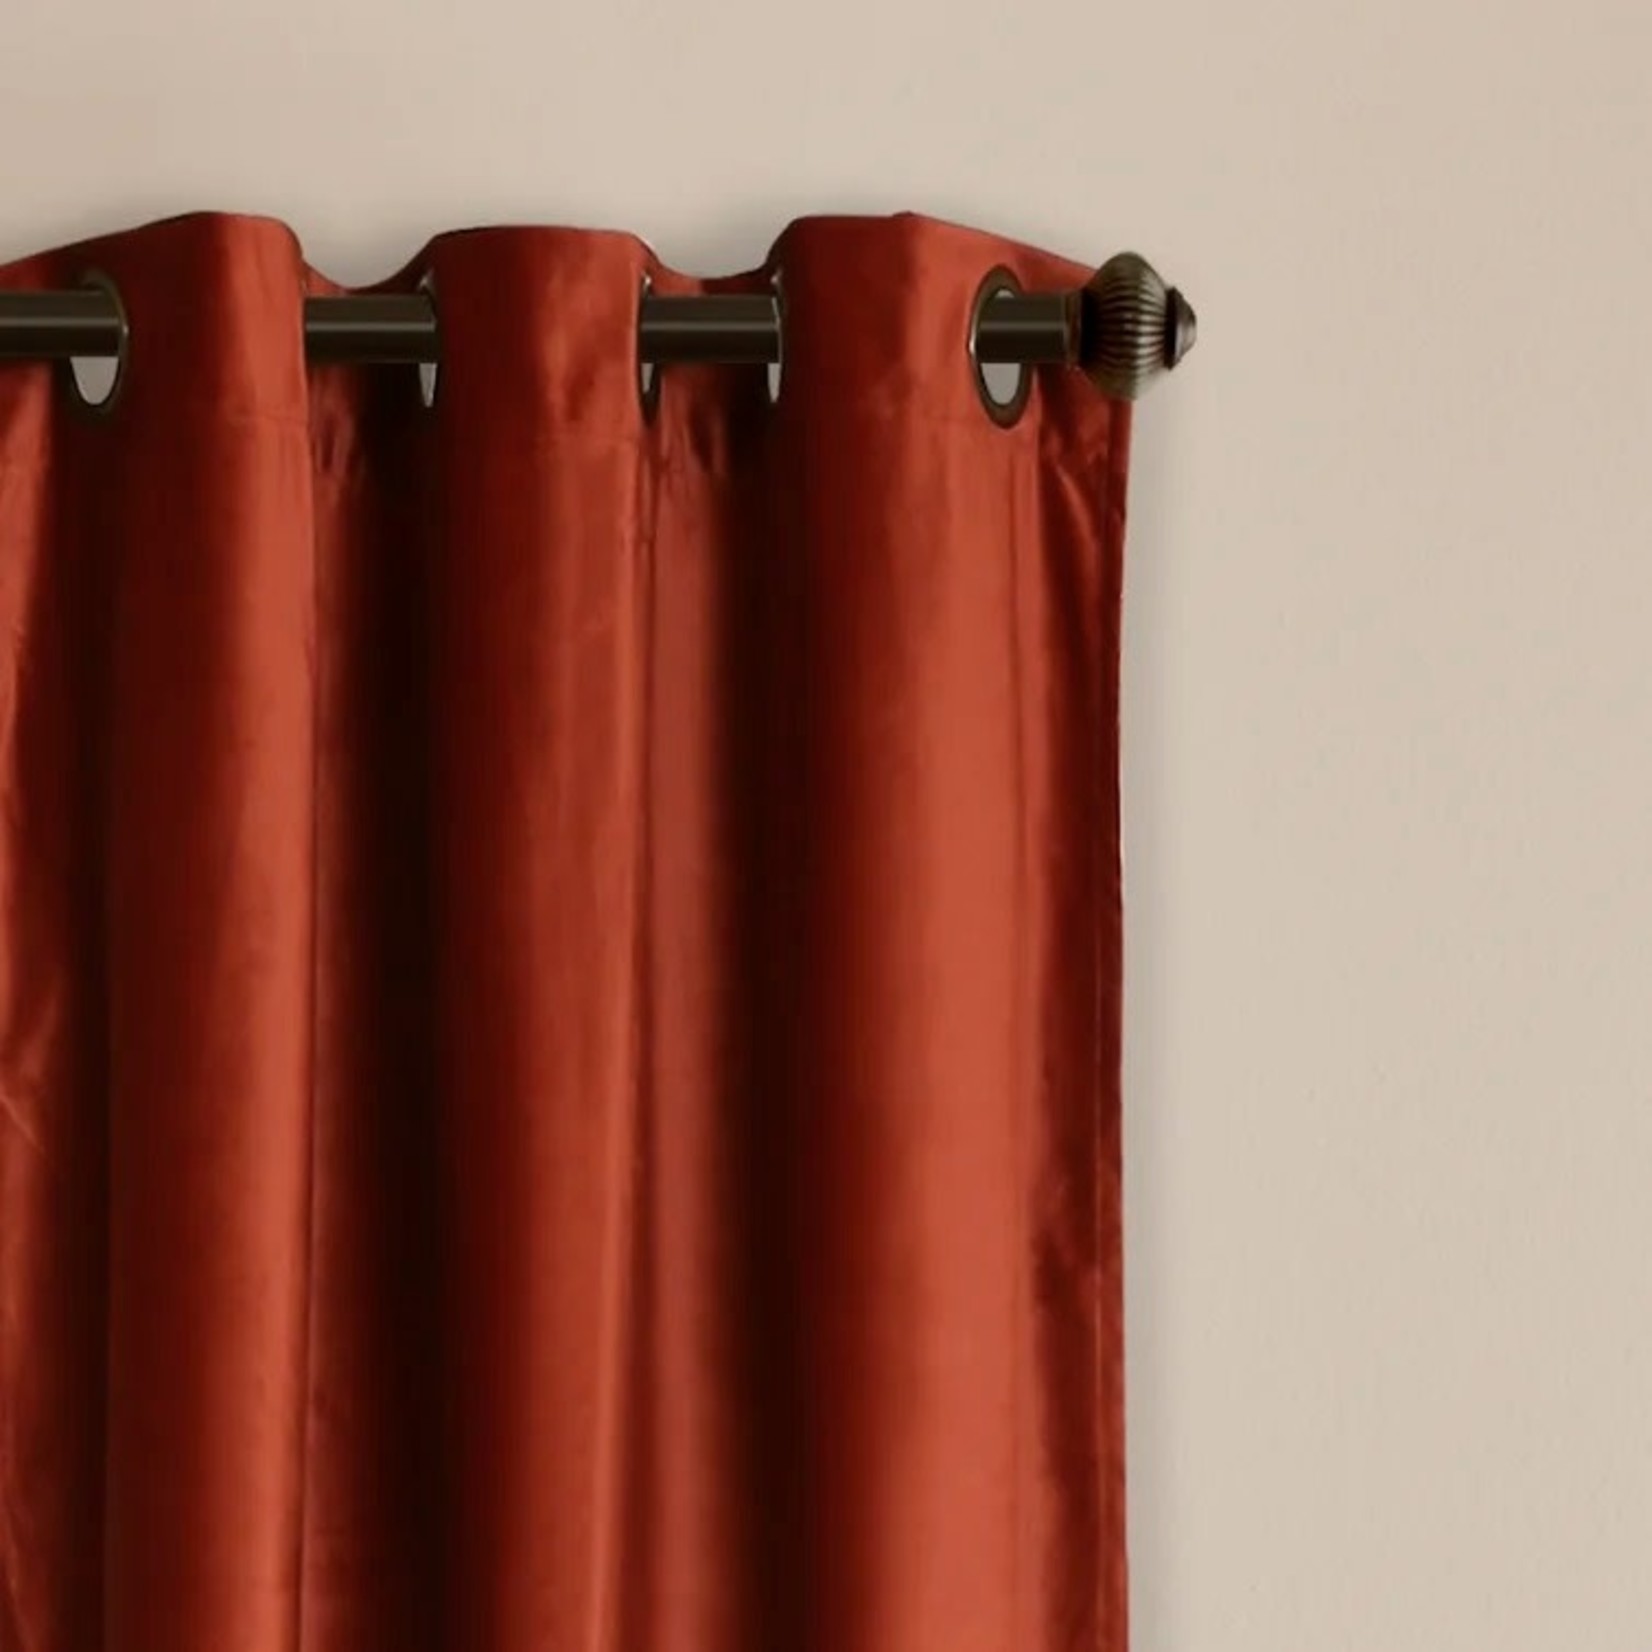 *38" x 95" Belknap Velvet Solid Room Darkening Curtain Panels - Set of 2 - Rust